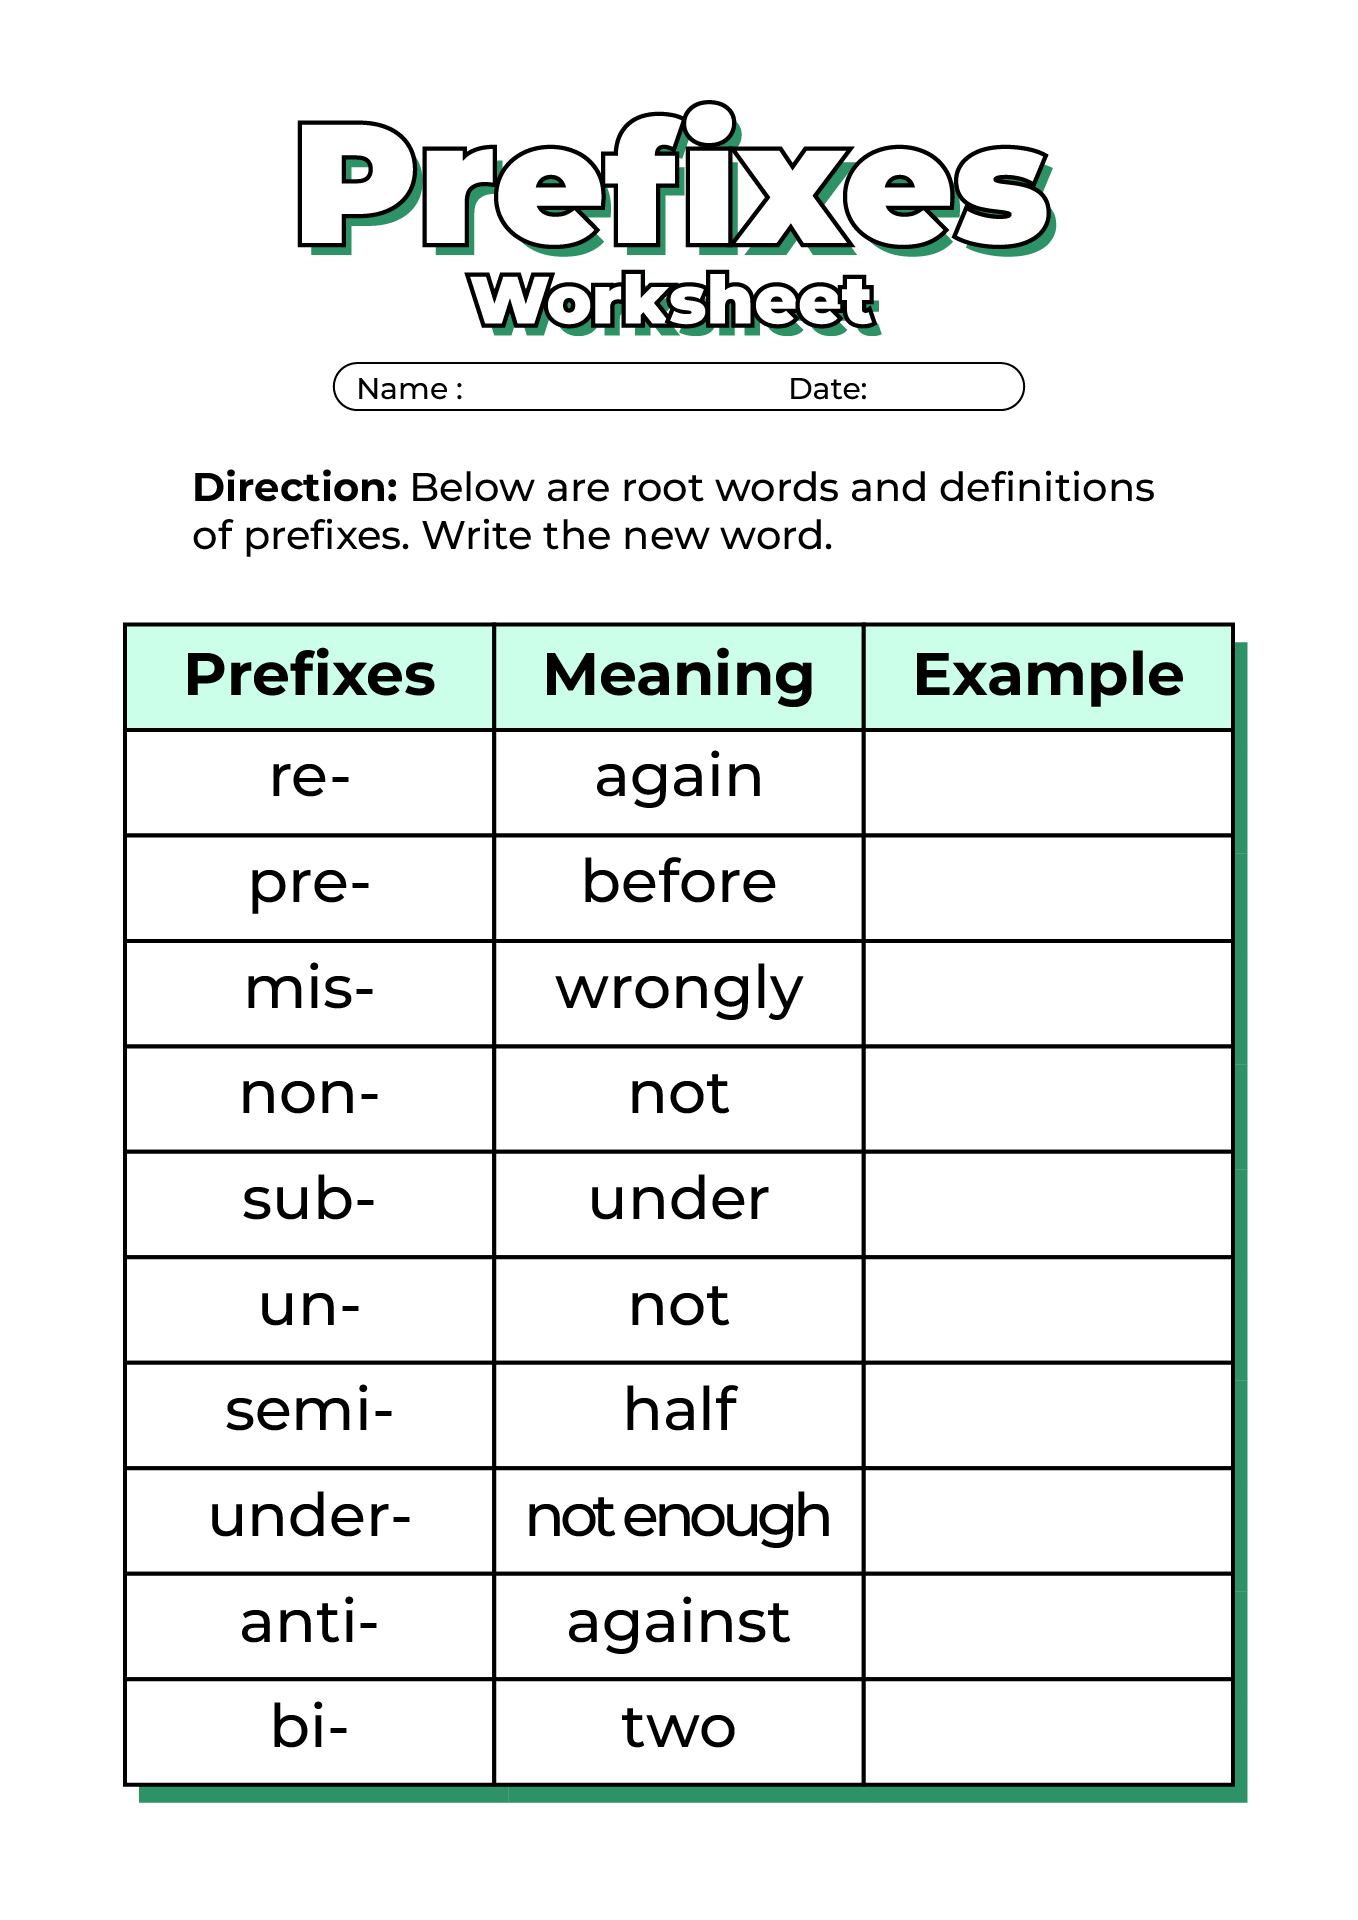 Prefix Suffix Worksheets 2nd Grade